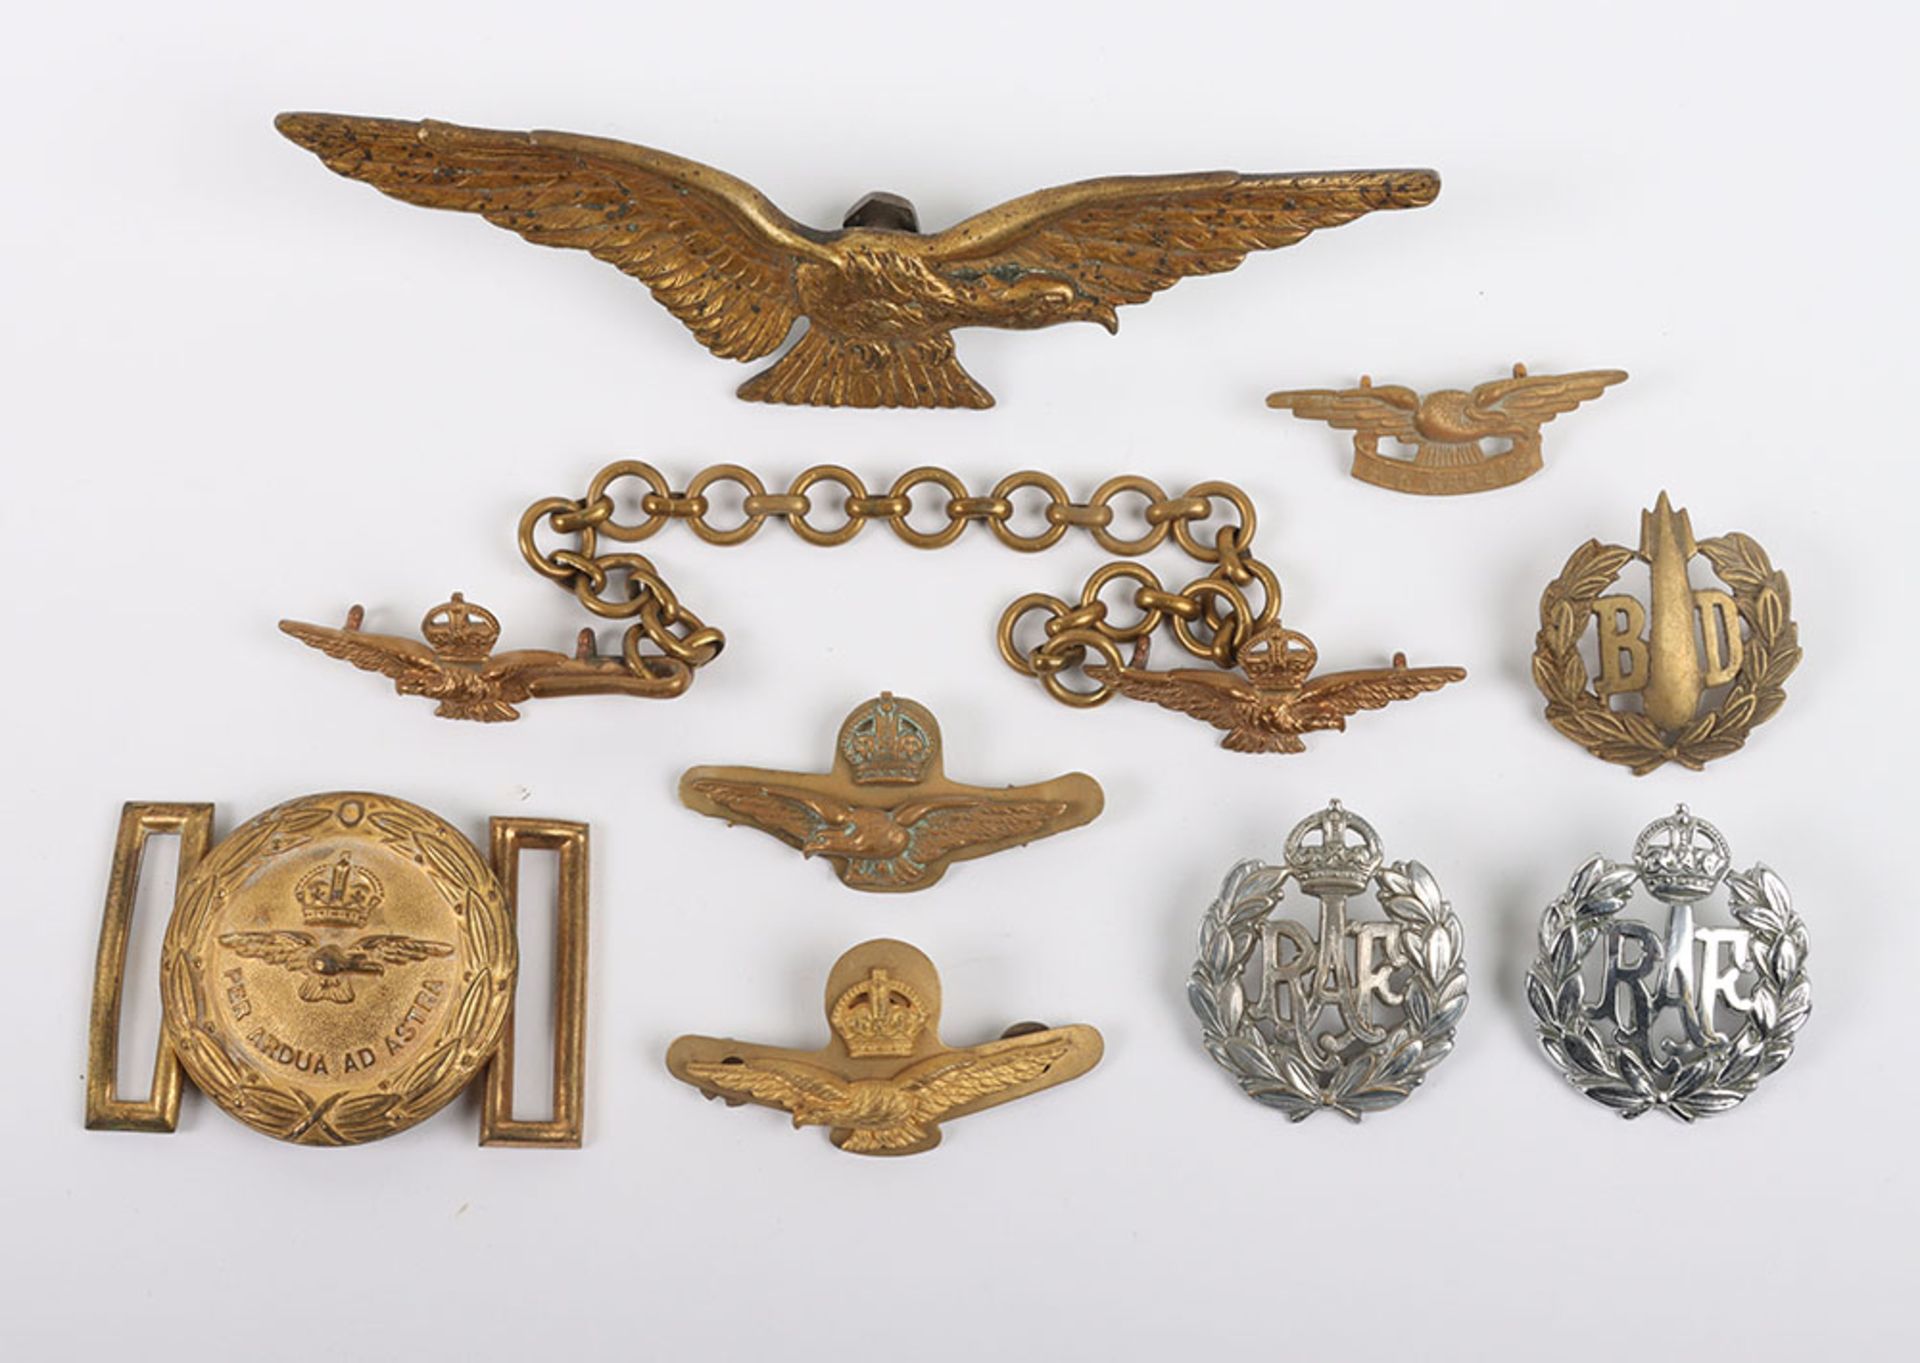 Royal Air Force Badges and Insignia